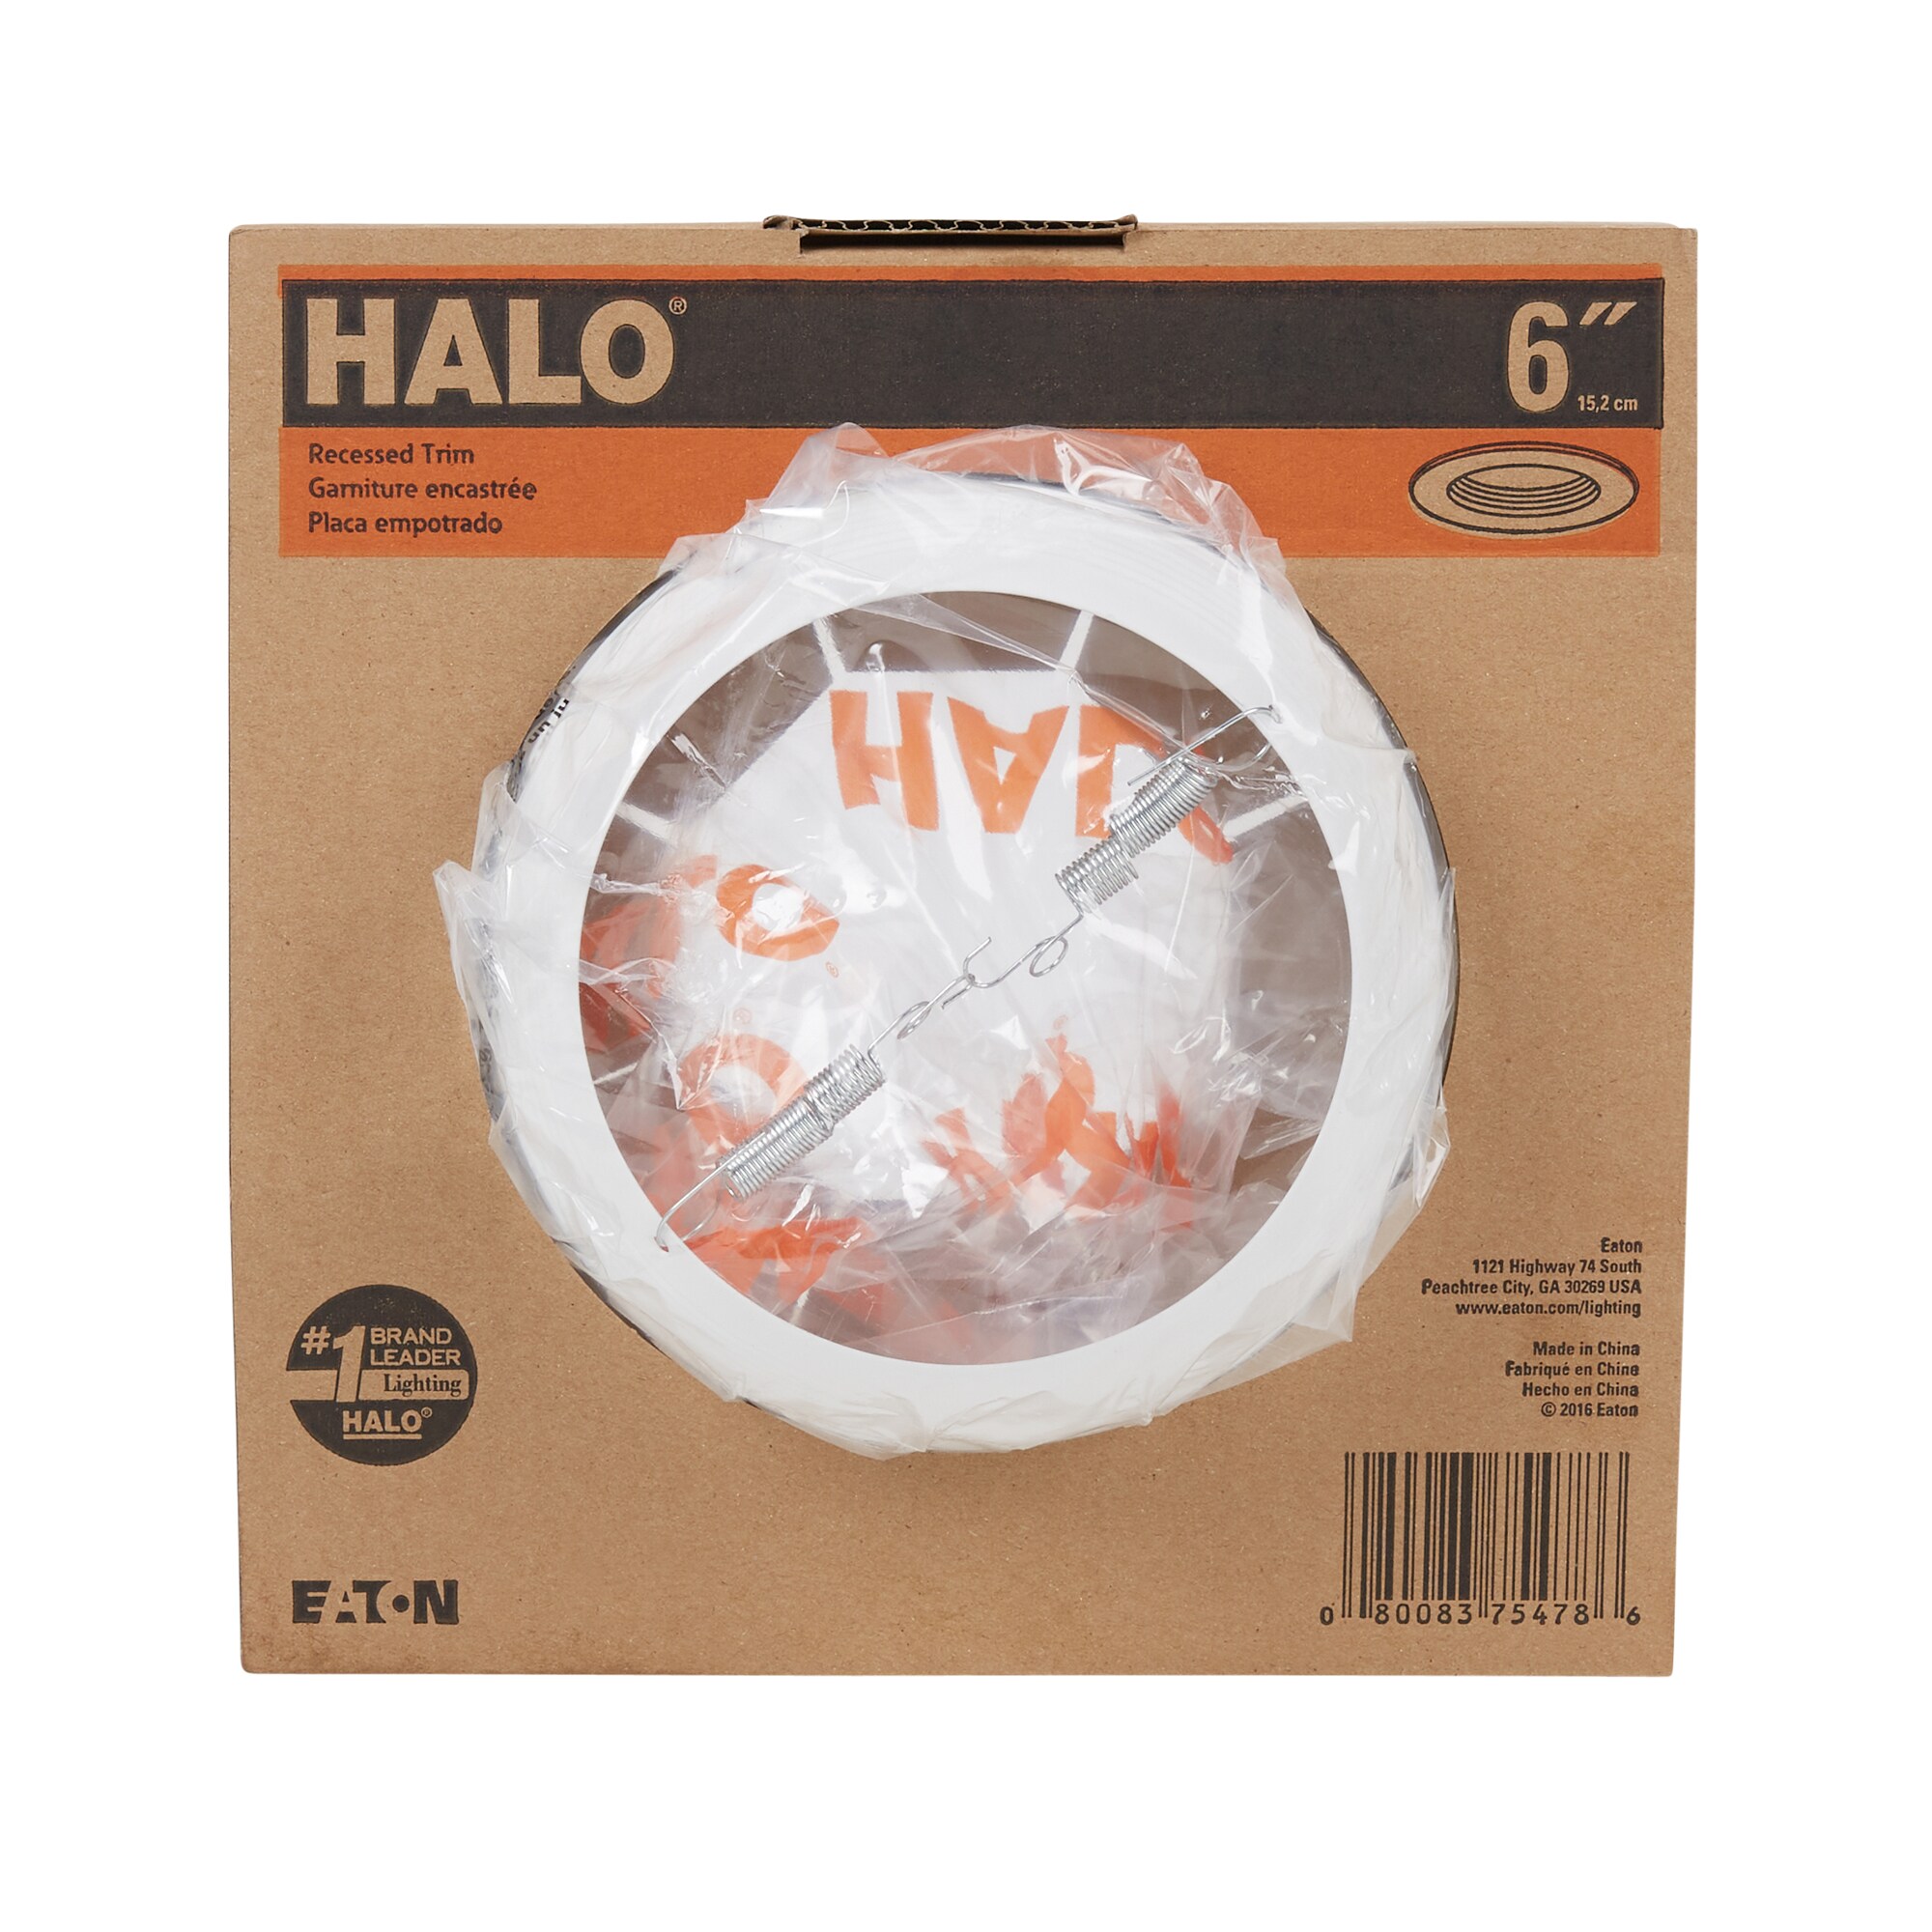 Halo Recessed 693WB 6-Inch LED Baffle Recessed Lighting Trim 